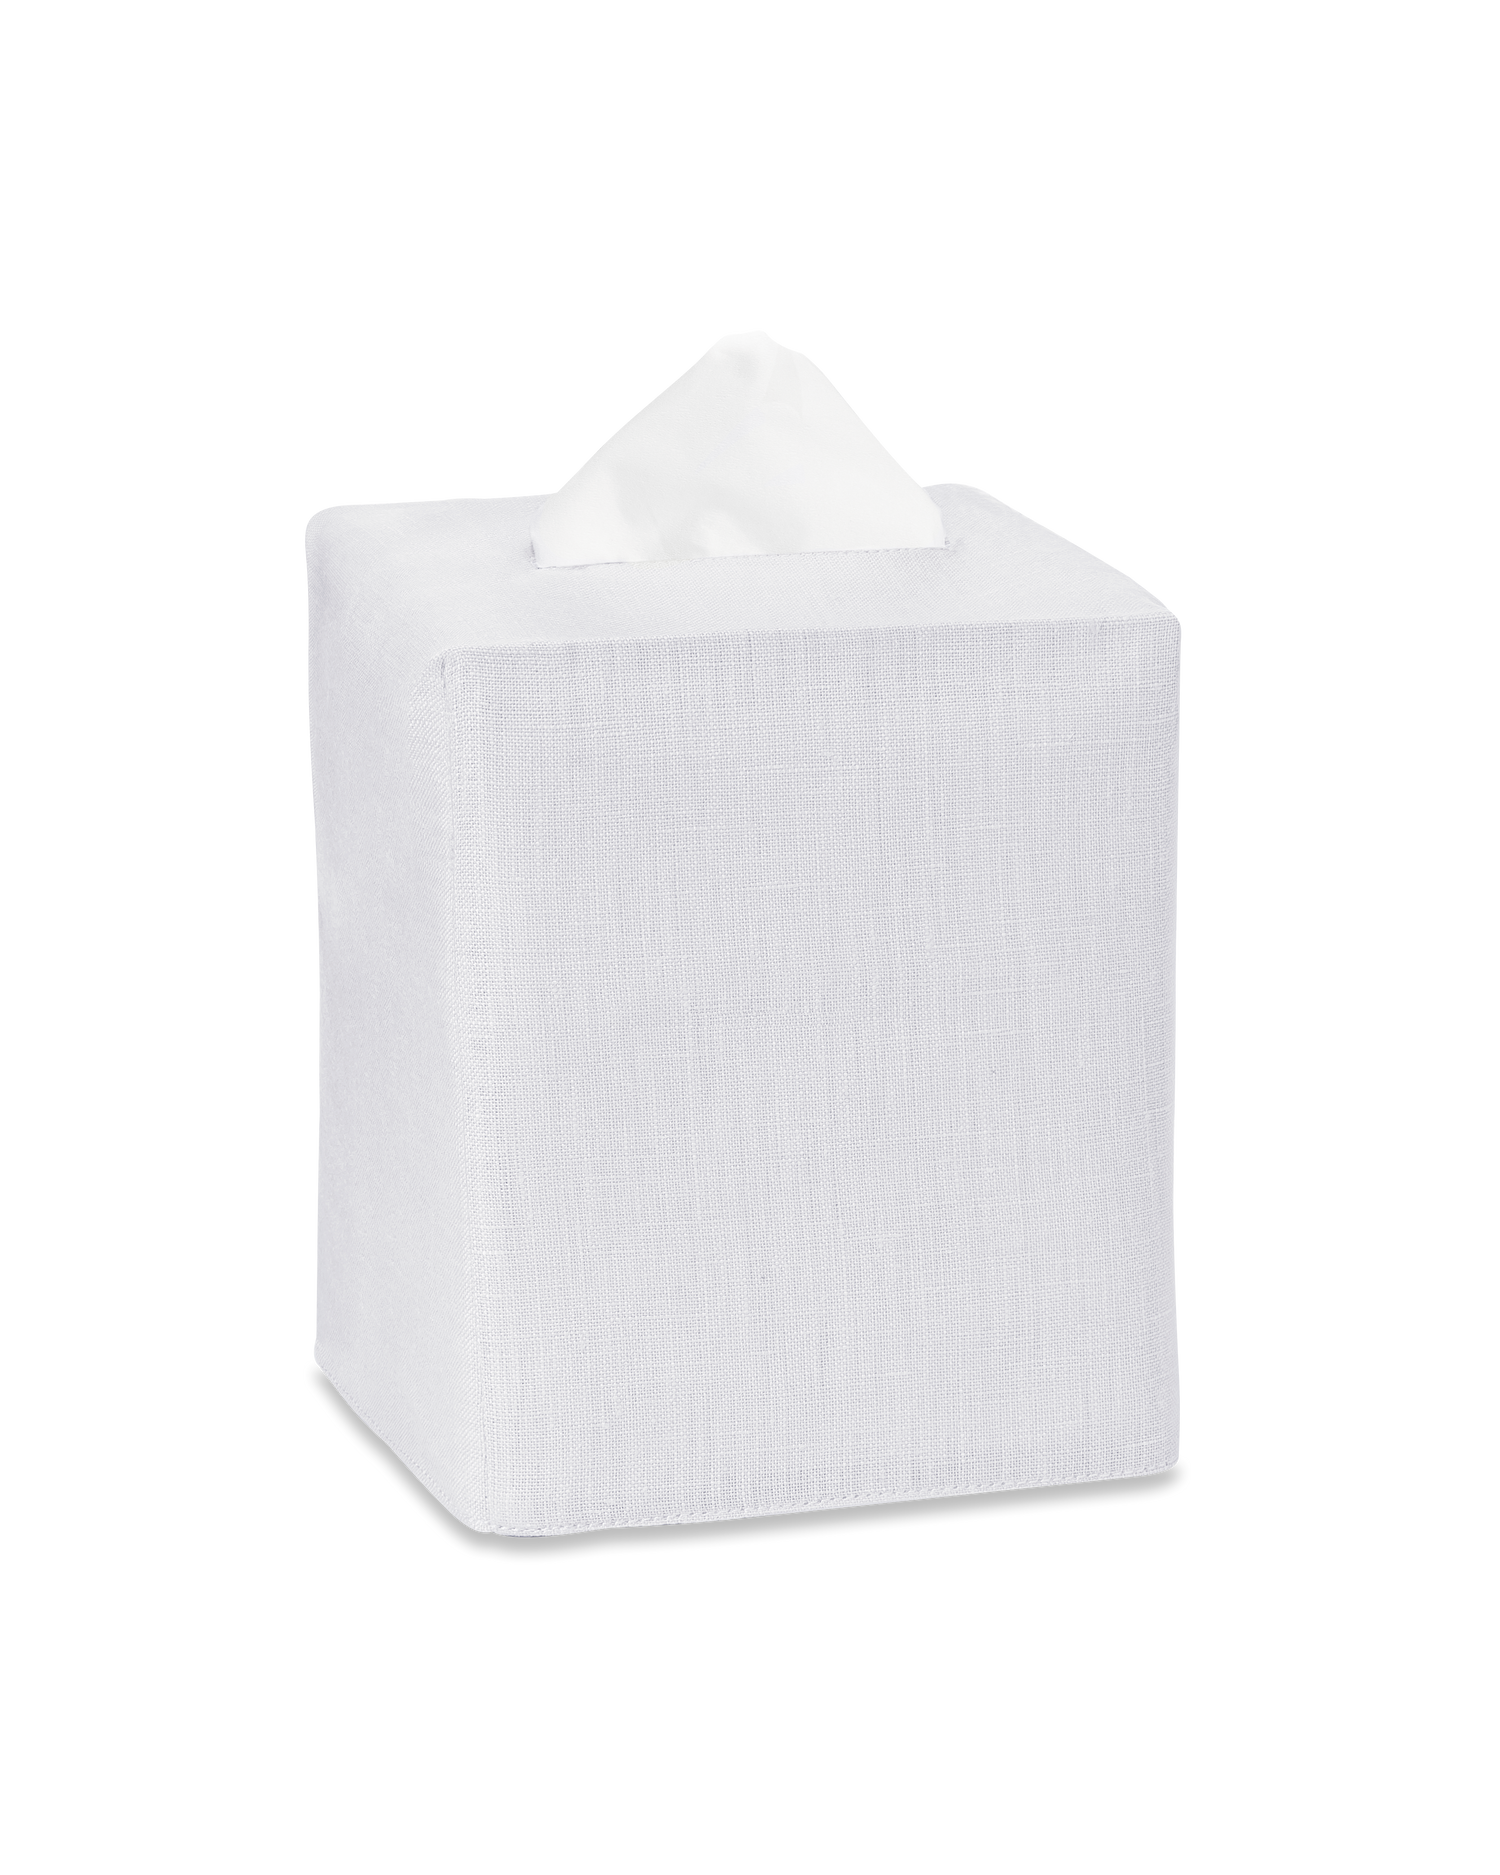 A white linen tissue box cover